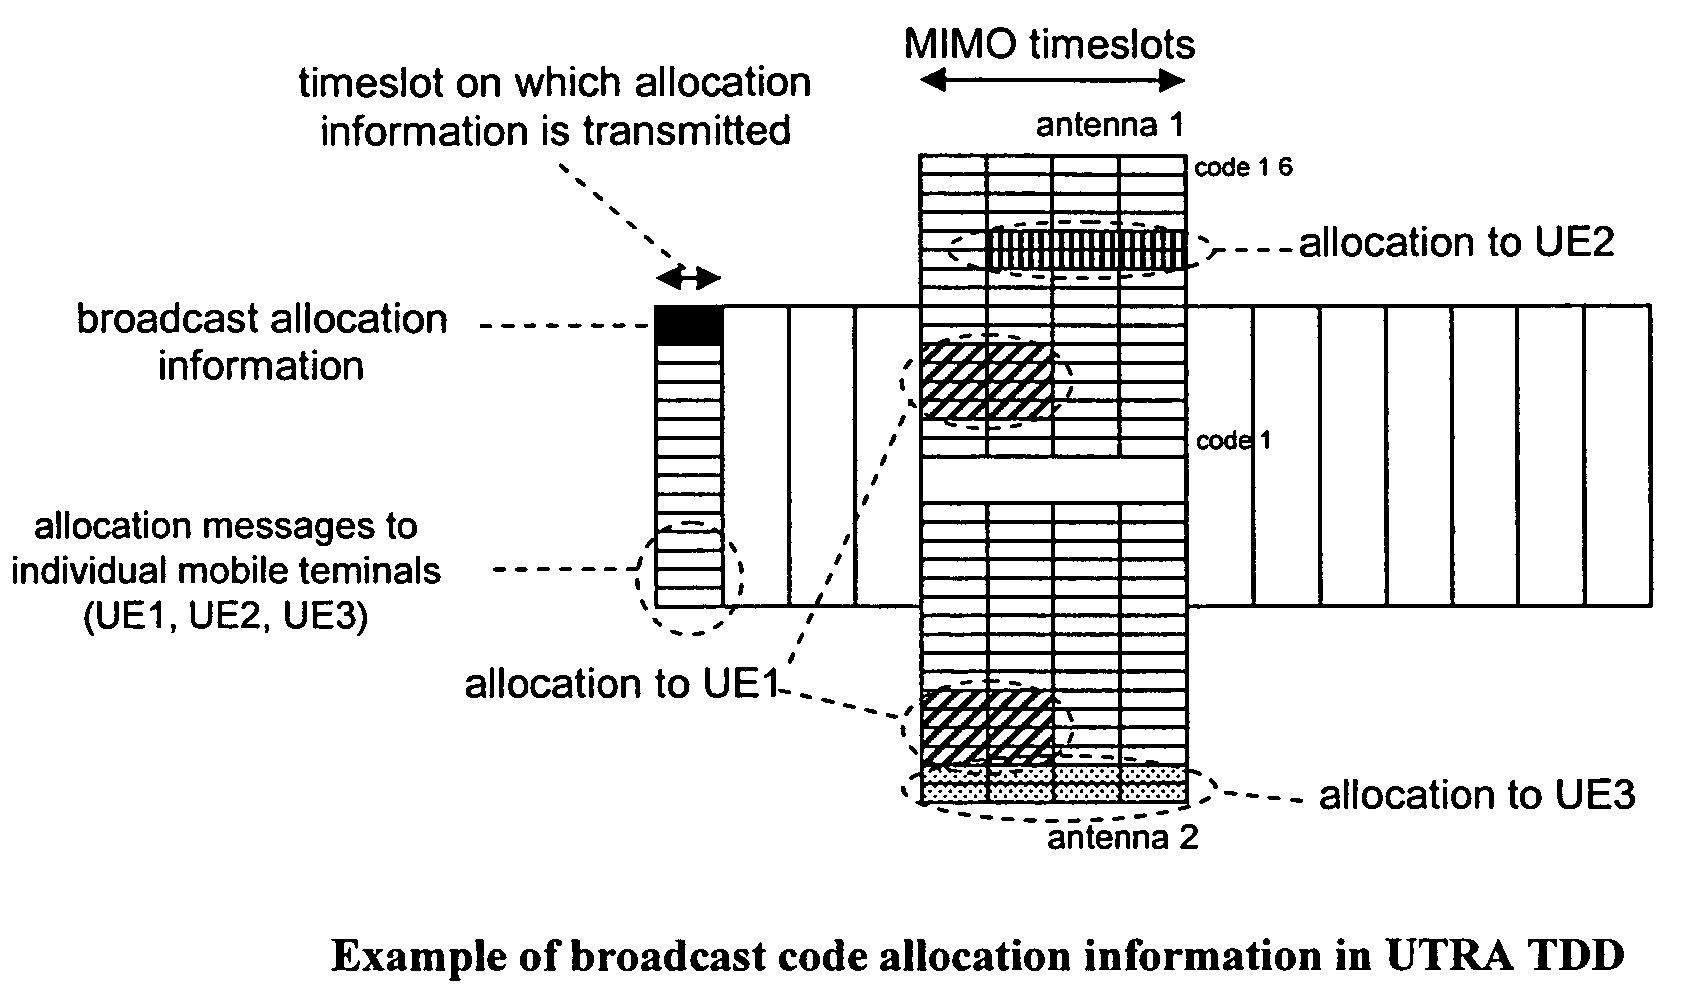 Signalling MIMO allocations